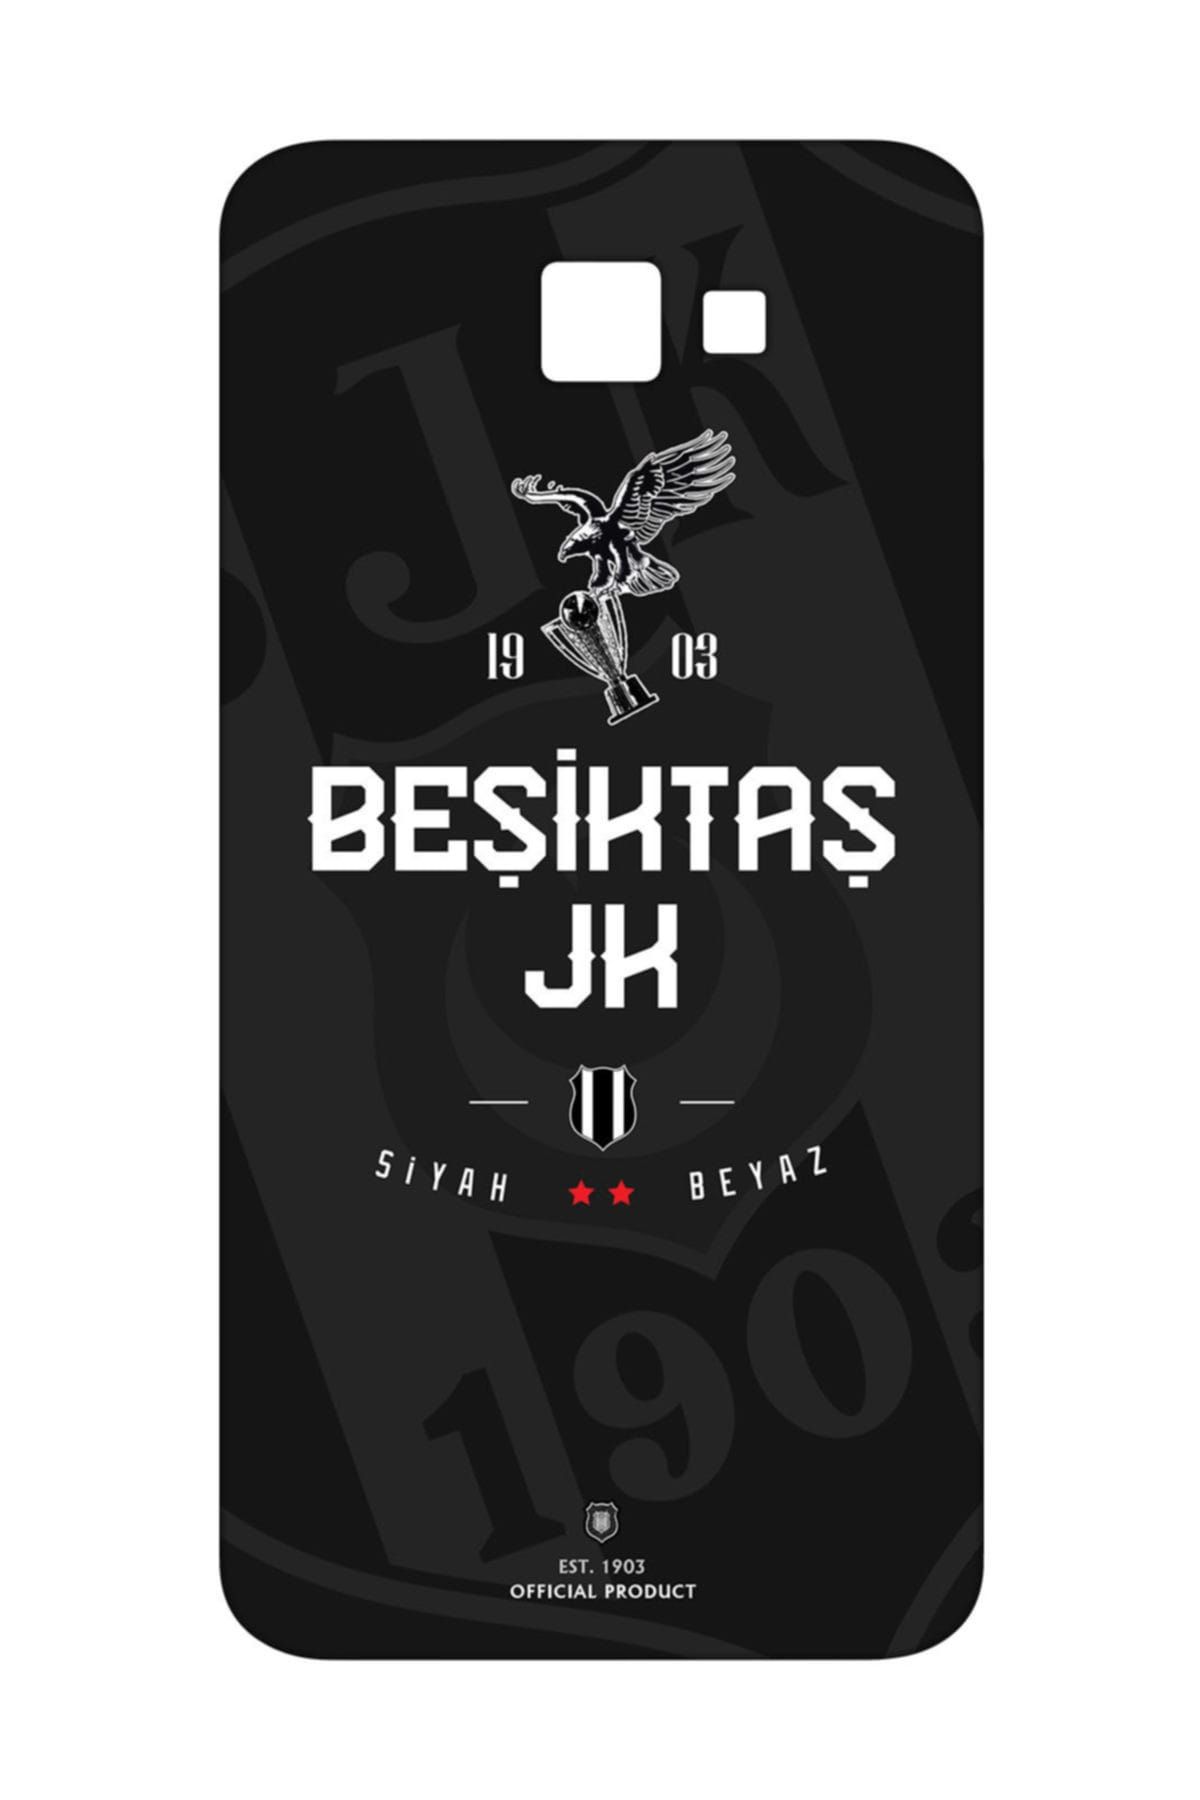 Beşiktaş BJK SAMSUNG J7 PRIME SİYAH BEYAZ